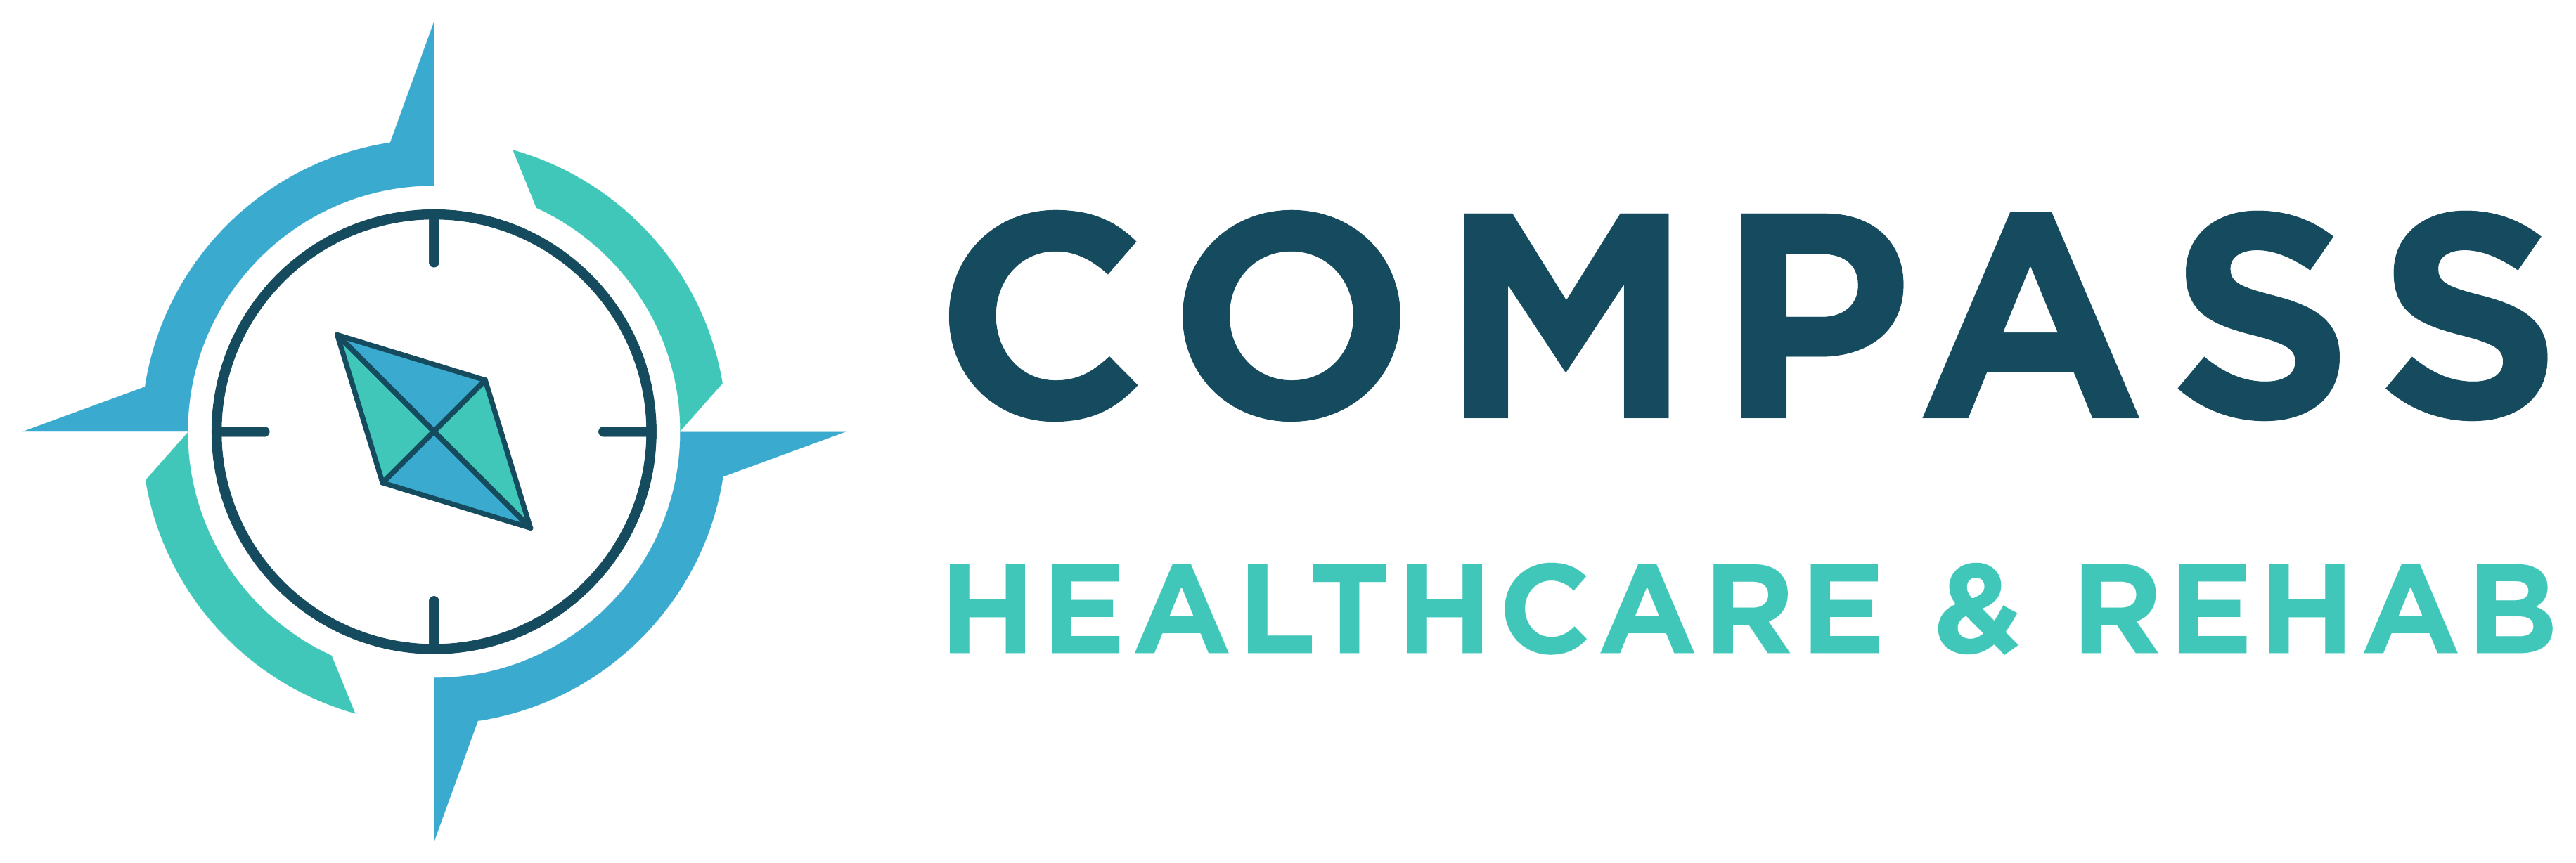 Compass healthcare logo